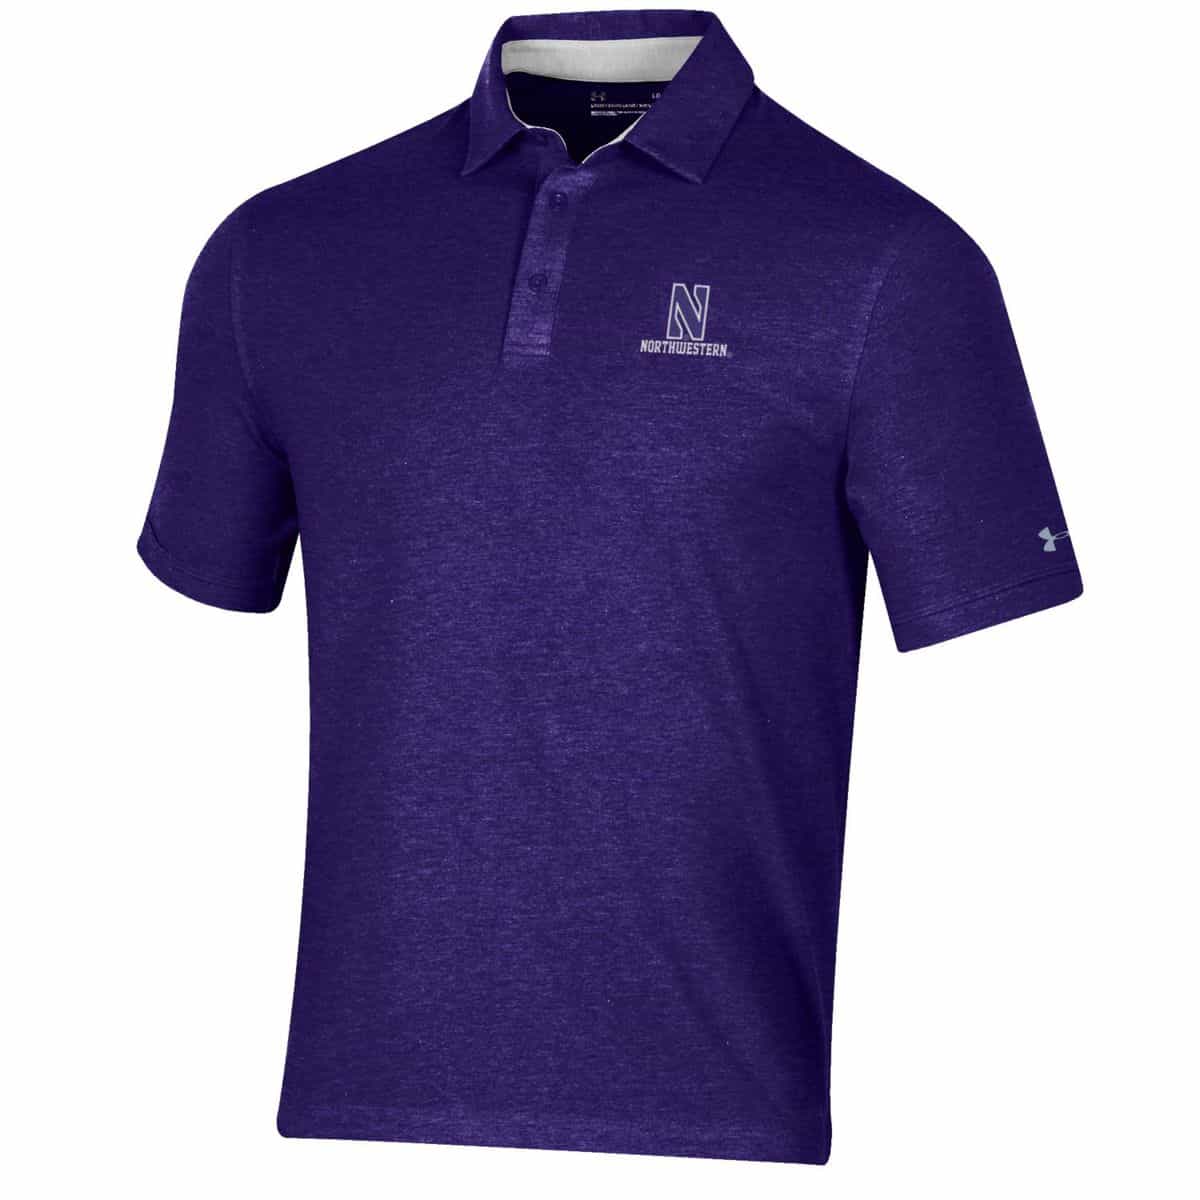 Northwestern Wildcats Men’s Under Armour Triblend Purple Heather Polo shirt